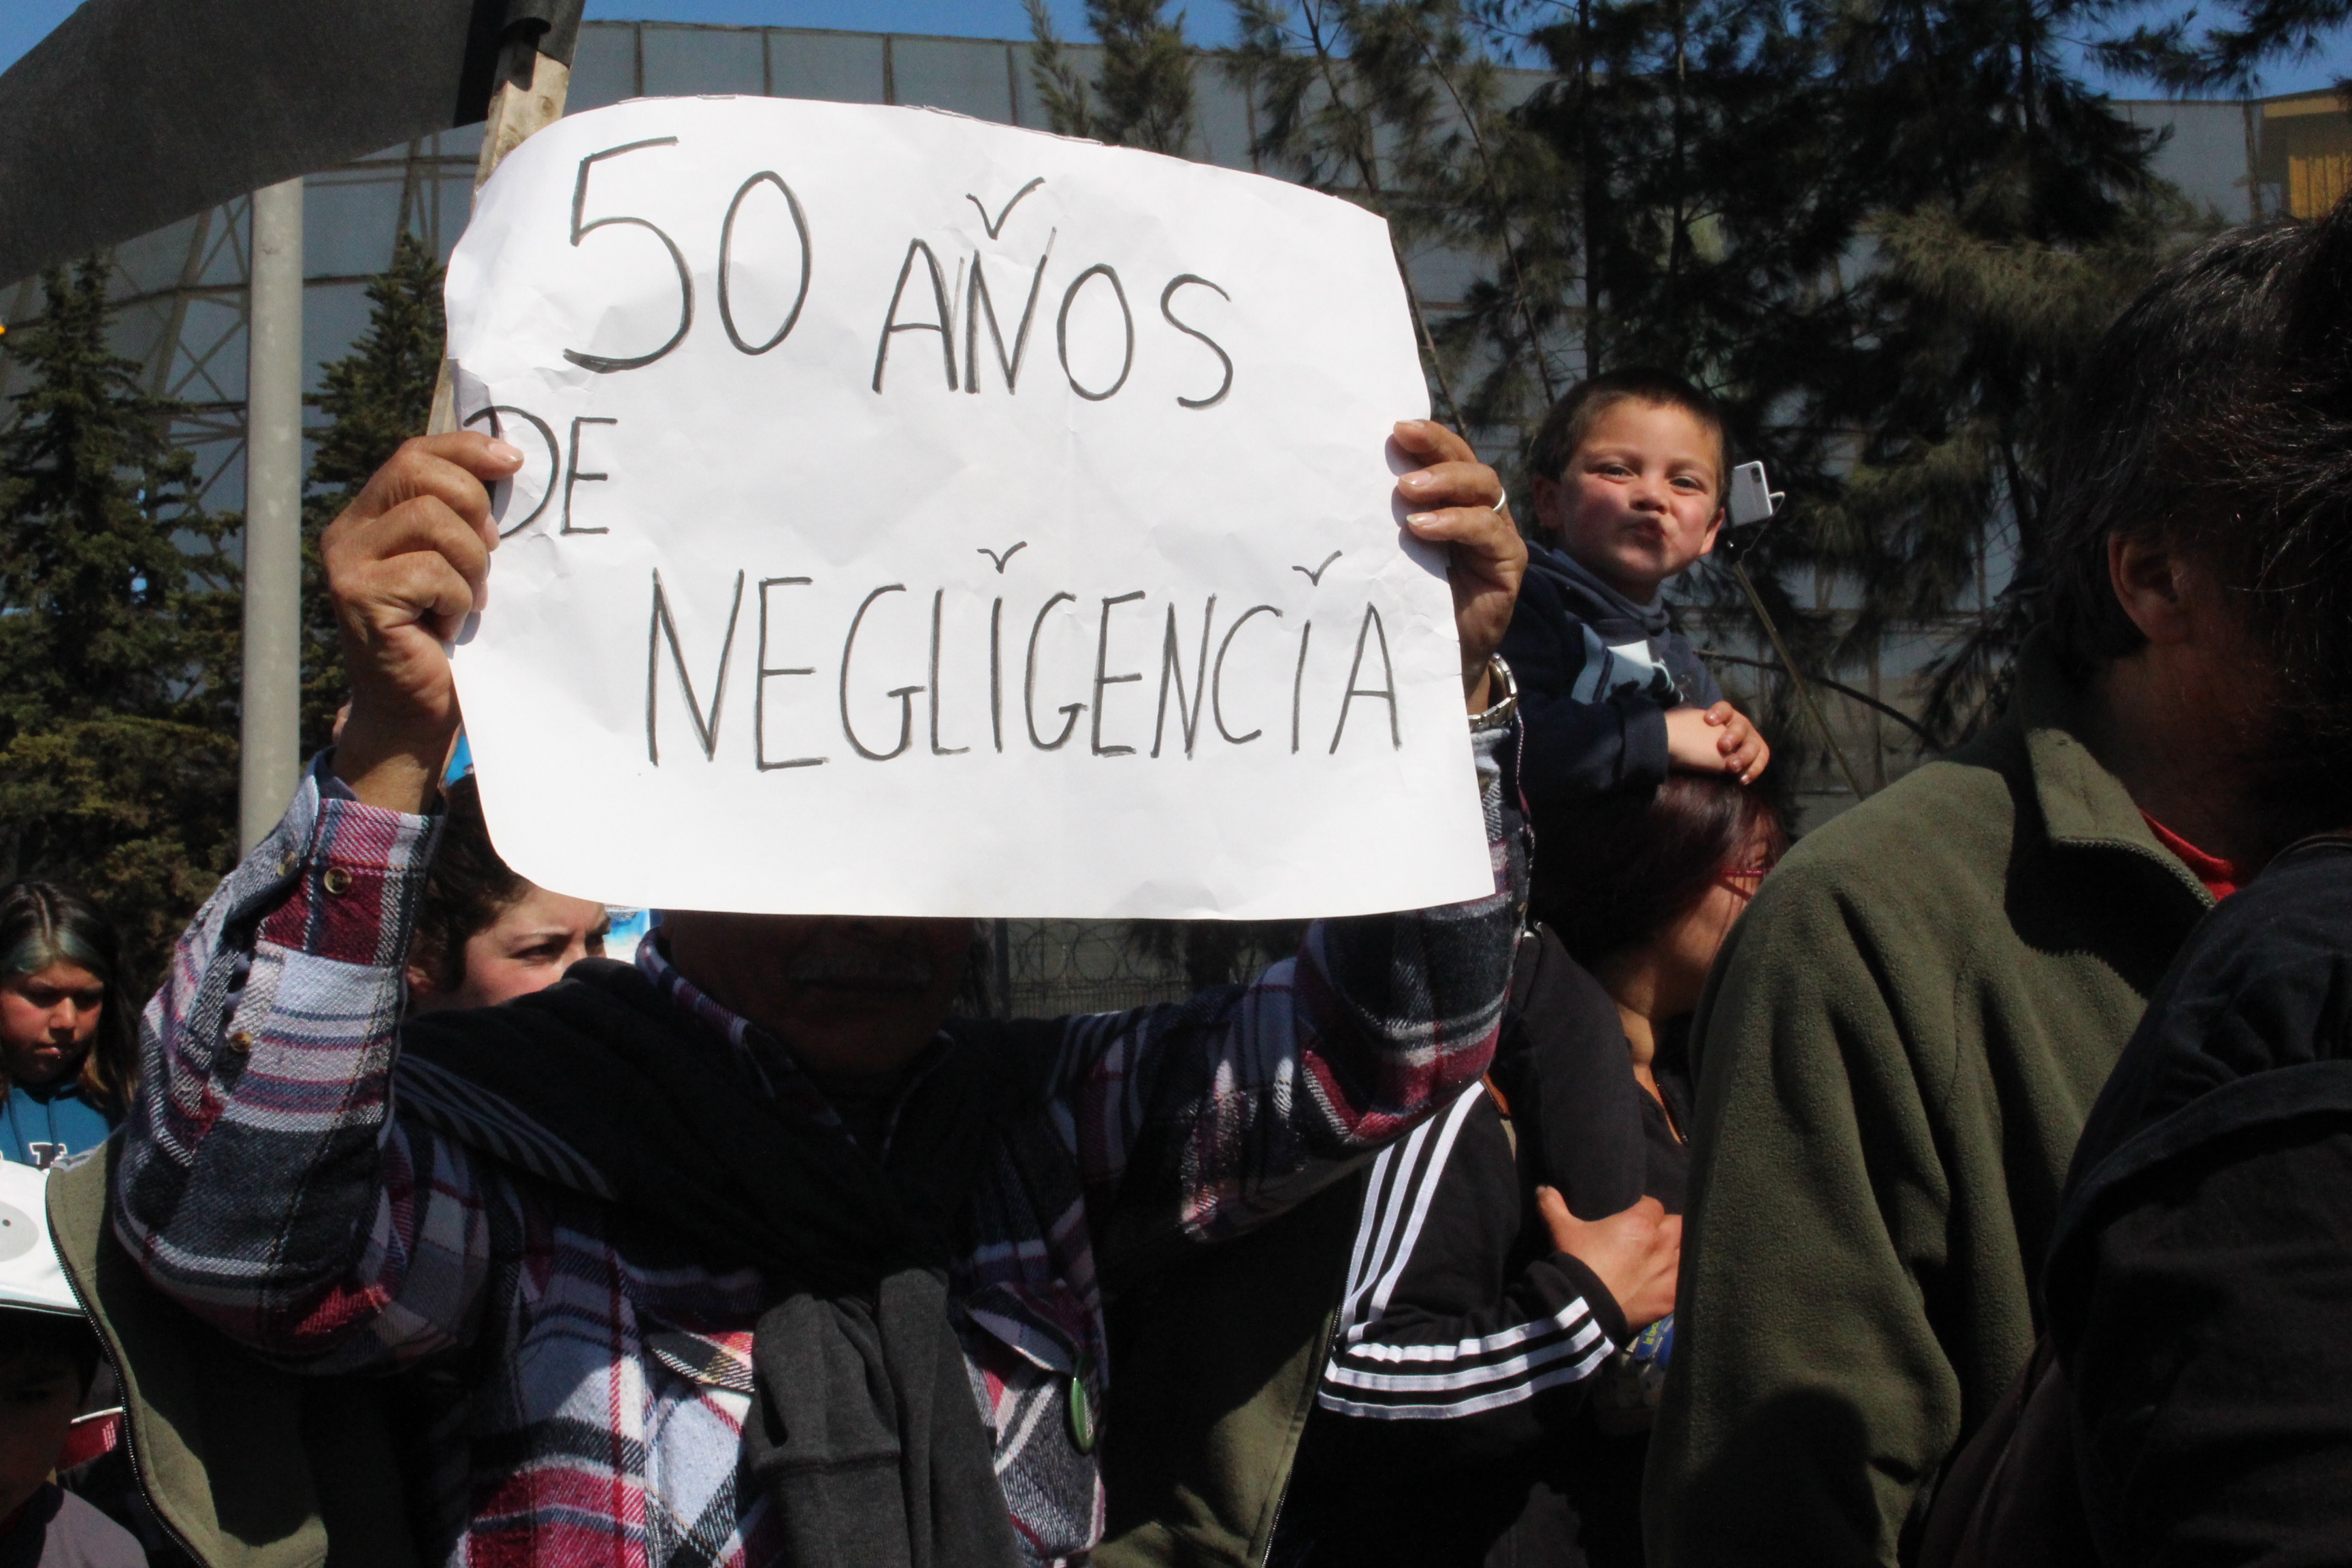 Abogado caso Quintero-Puchuncaví: “Vamos a pedir la aplicación de cárcel efectiva para los responsables”